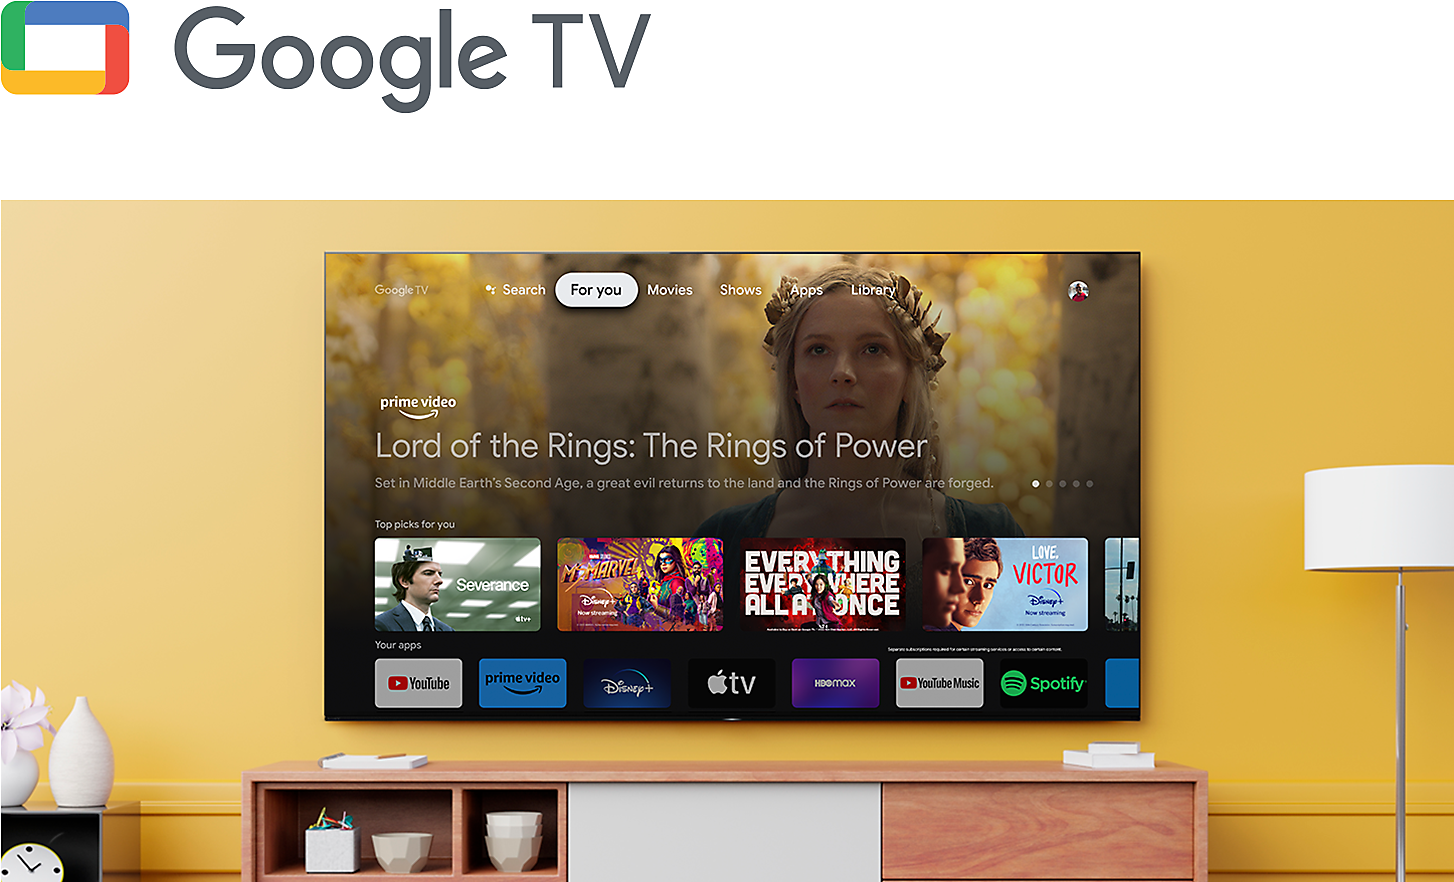 Logotip za Google TV iznad dnevne sobe u kojoj je BRAVIA televizor montiran na zid, na zaslonu je prikazan niz aplikacija za zabavne sadržaje i streaming servise